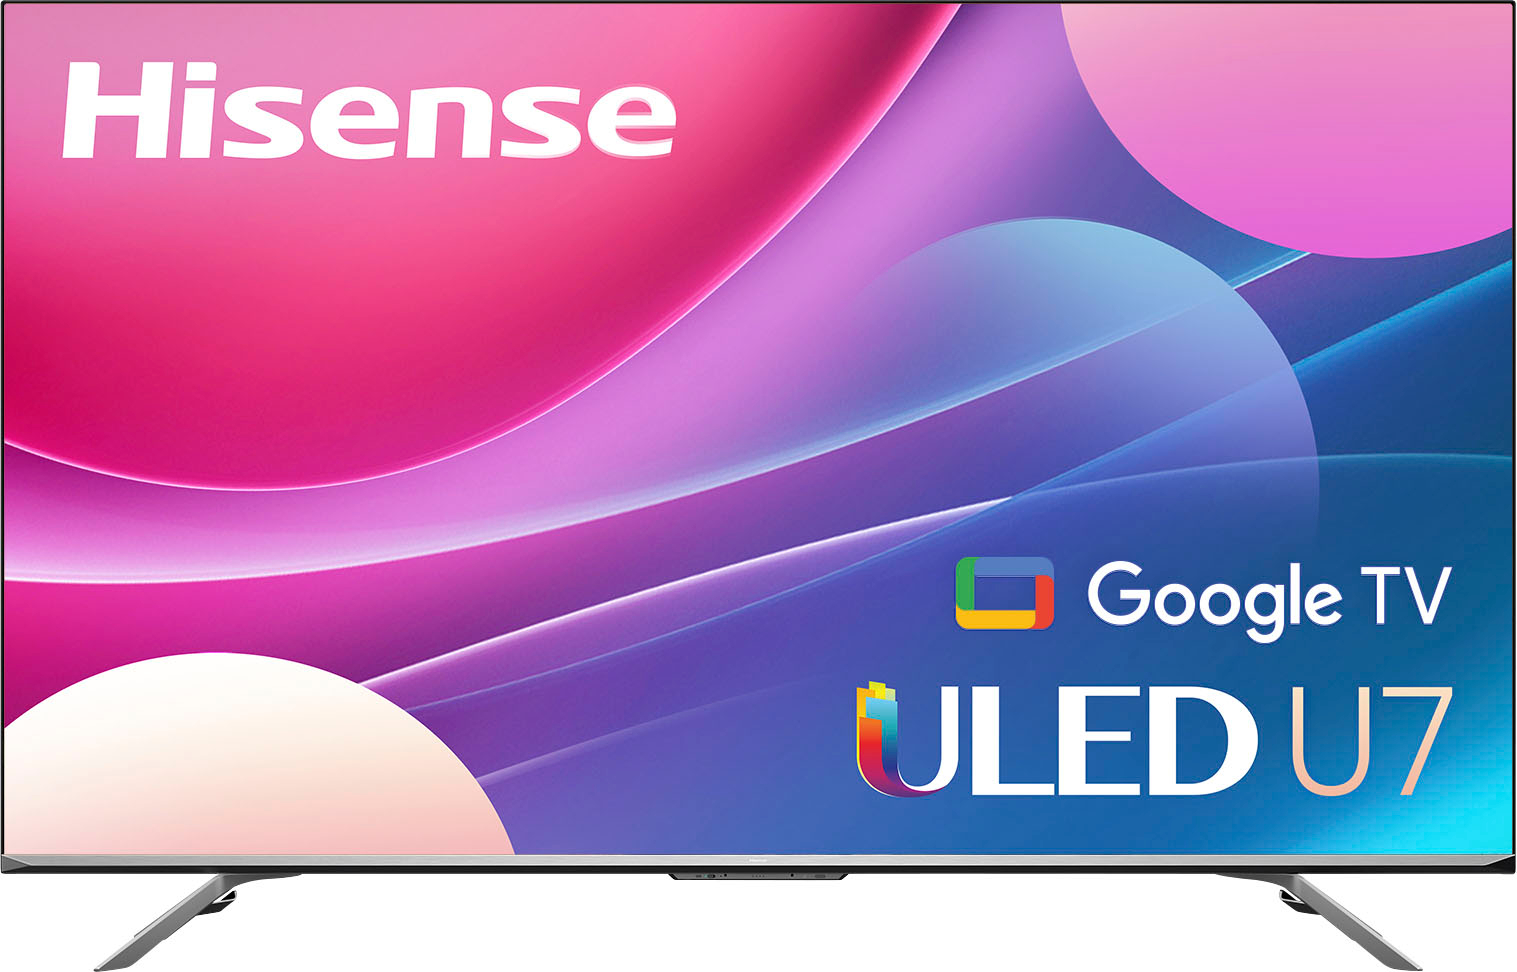 Hisense ULED Premium U7H QLED Series 55-inch Class Quantum Dot Google 4K Smart TV $550